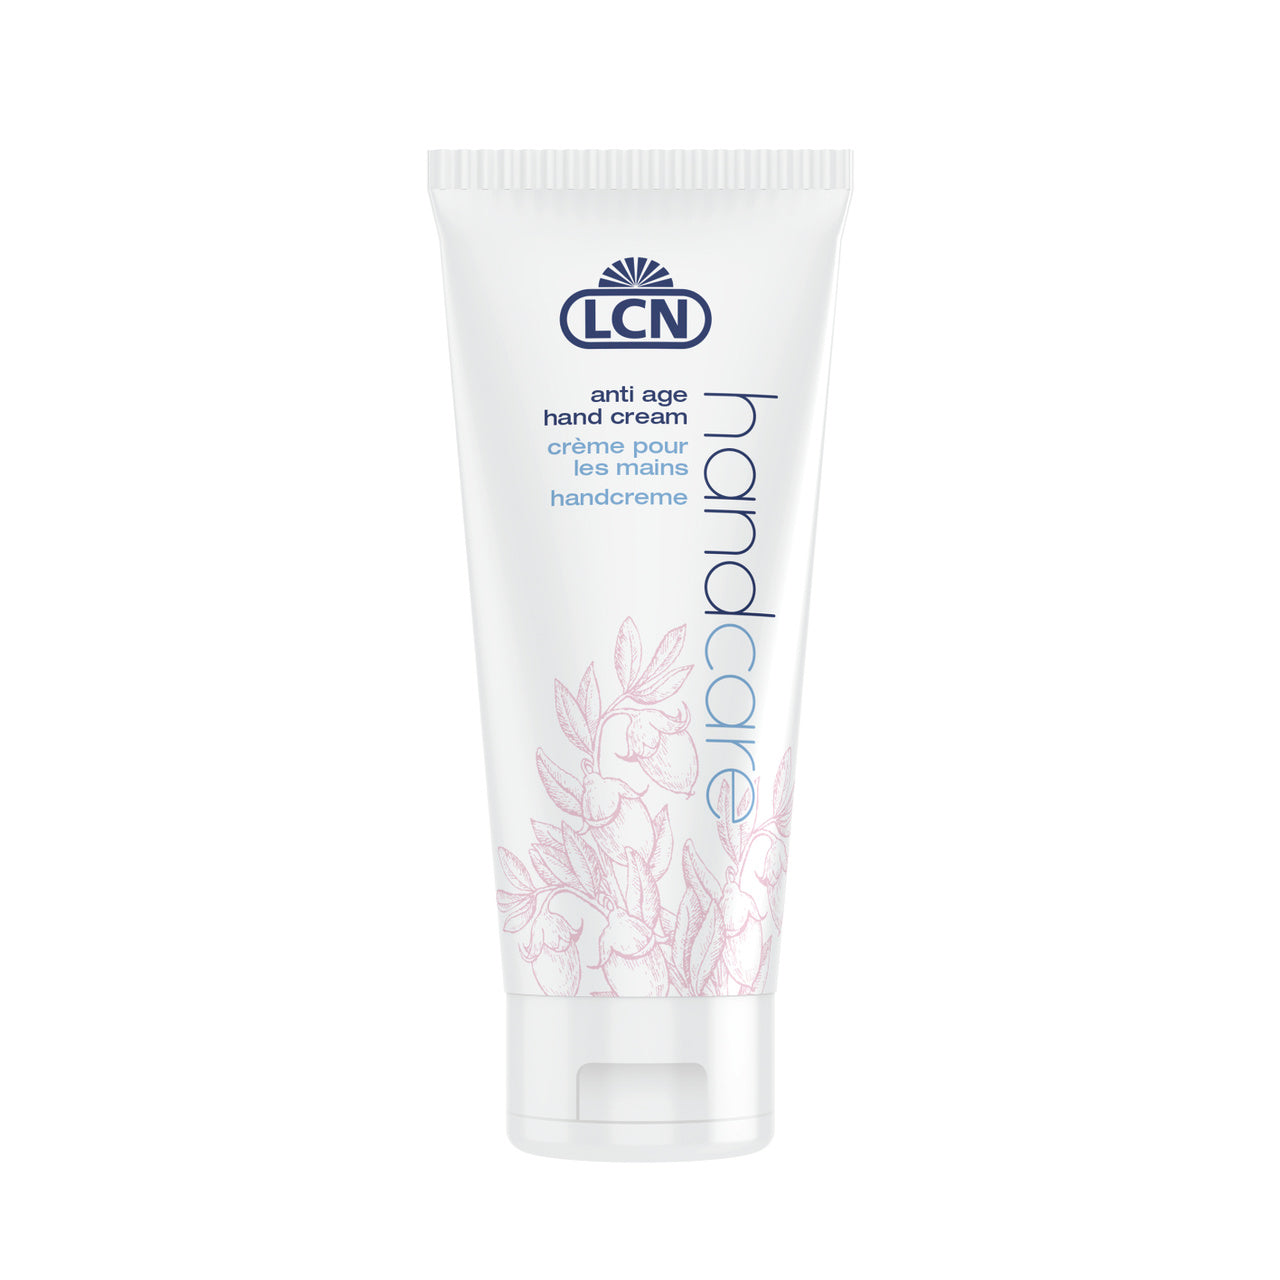 LCN Anti Age Hand Cream, 30ml